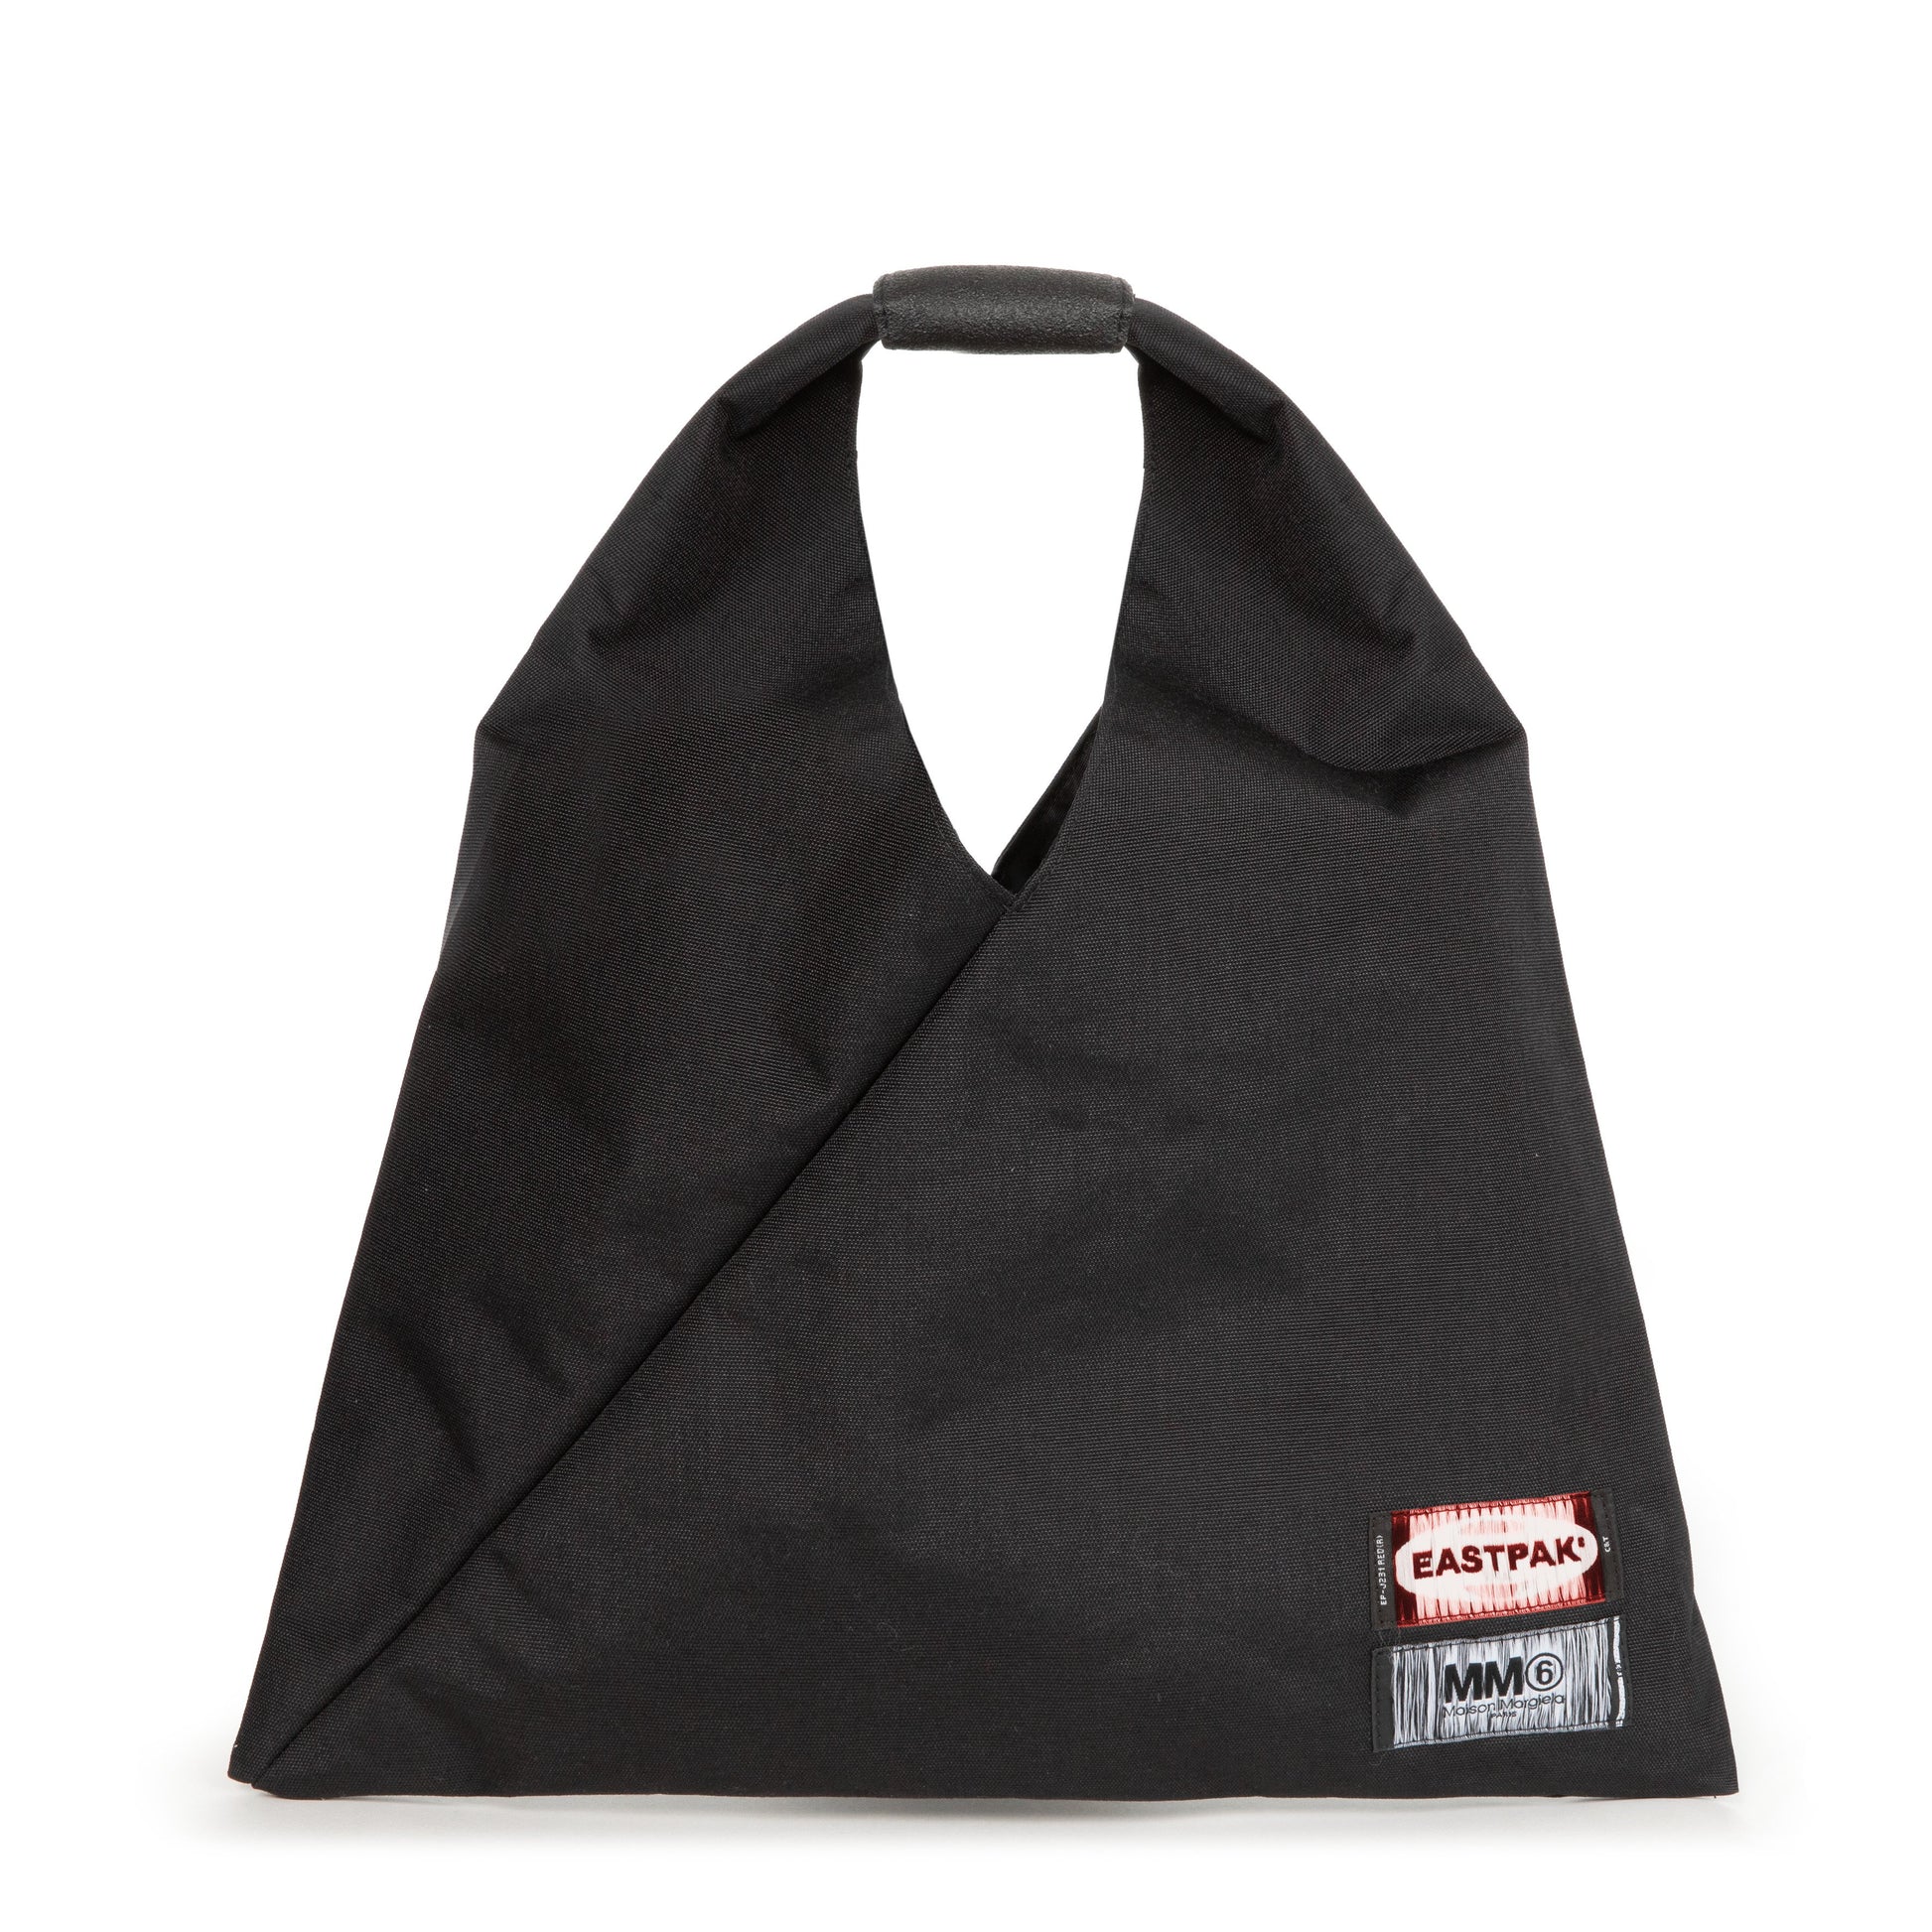 eastpak eastpak x mm6 japanese bag (black) EK0A5BATQ761-BLK